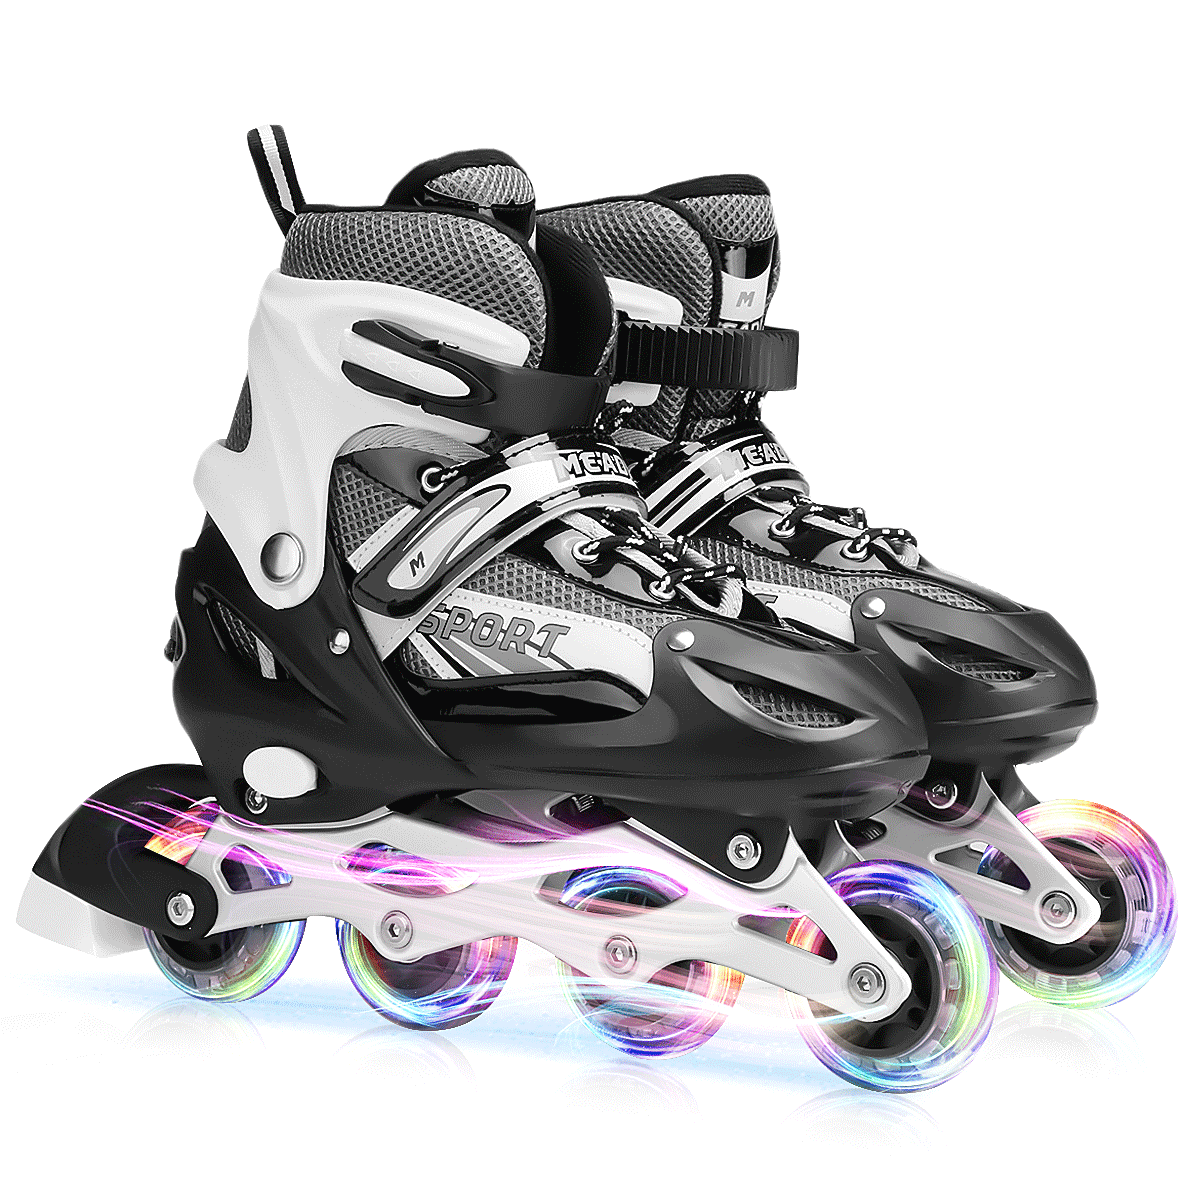 Bestgoods Kids Adjustable Inline Skates with Light up Wheels, Outdoor & Indoor Illuminating Roller Skates, Roller skates skating shoes for Boys, Girls, Beginners